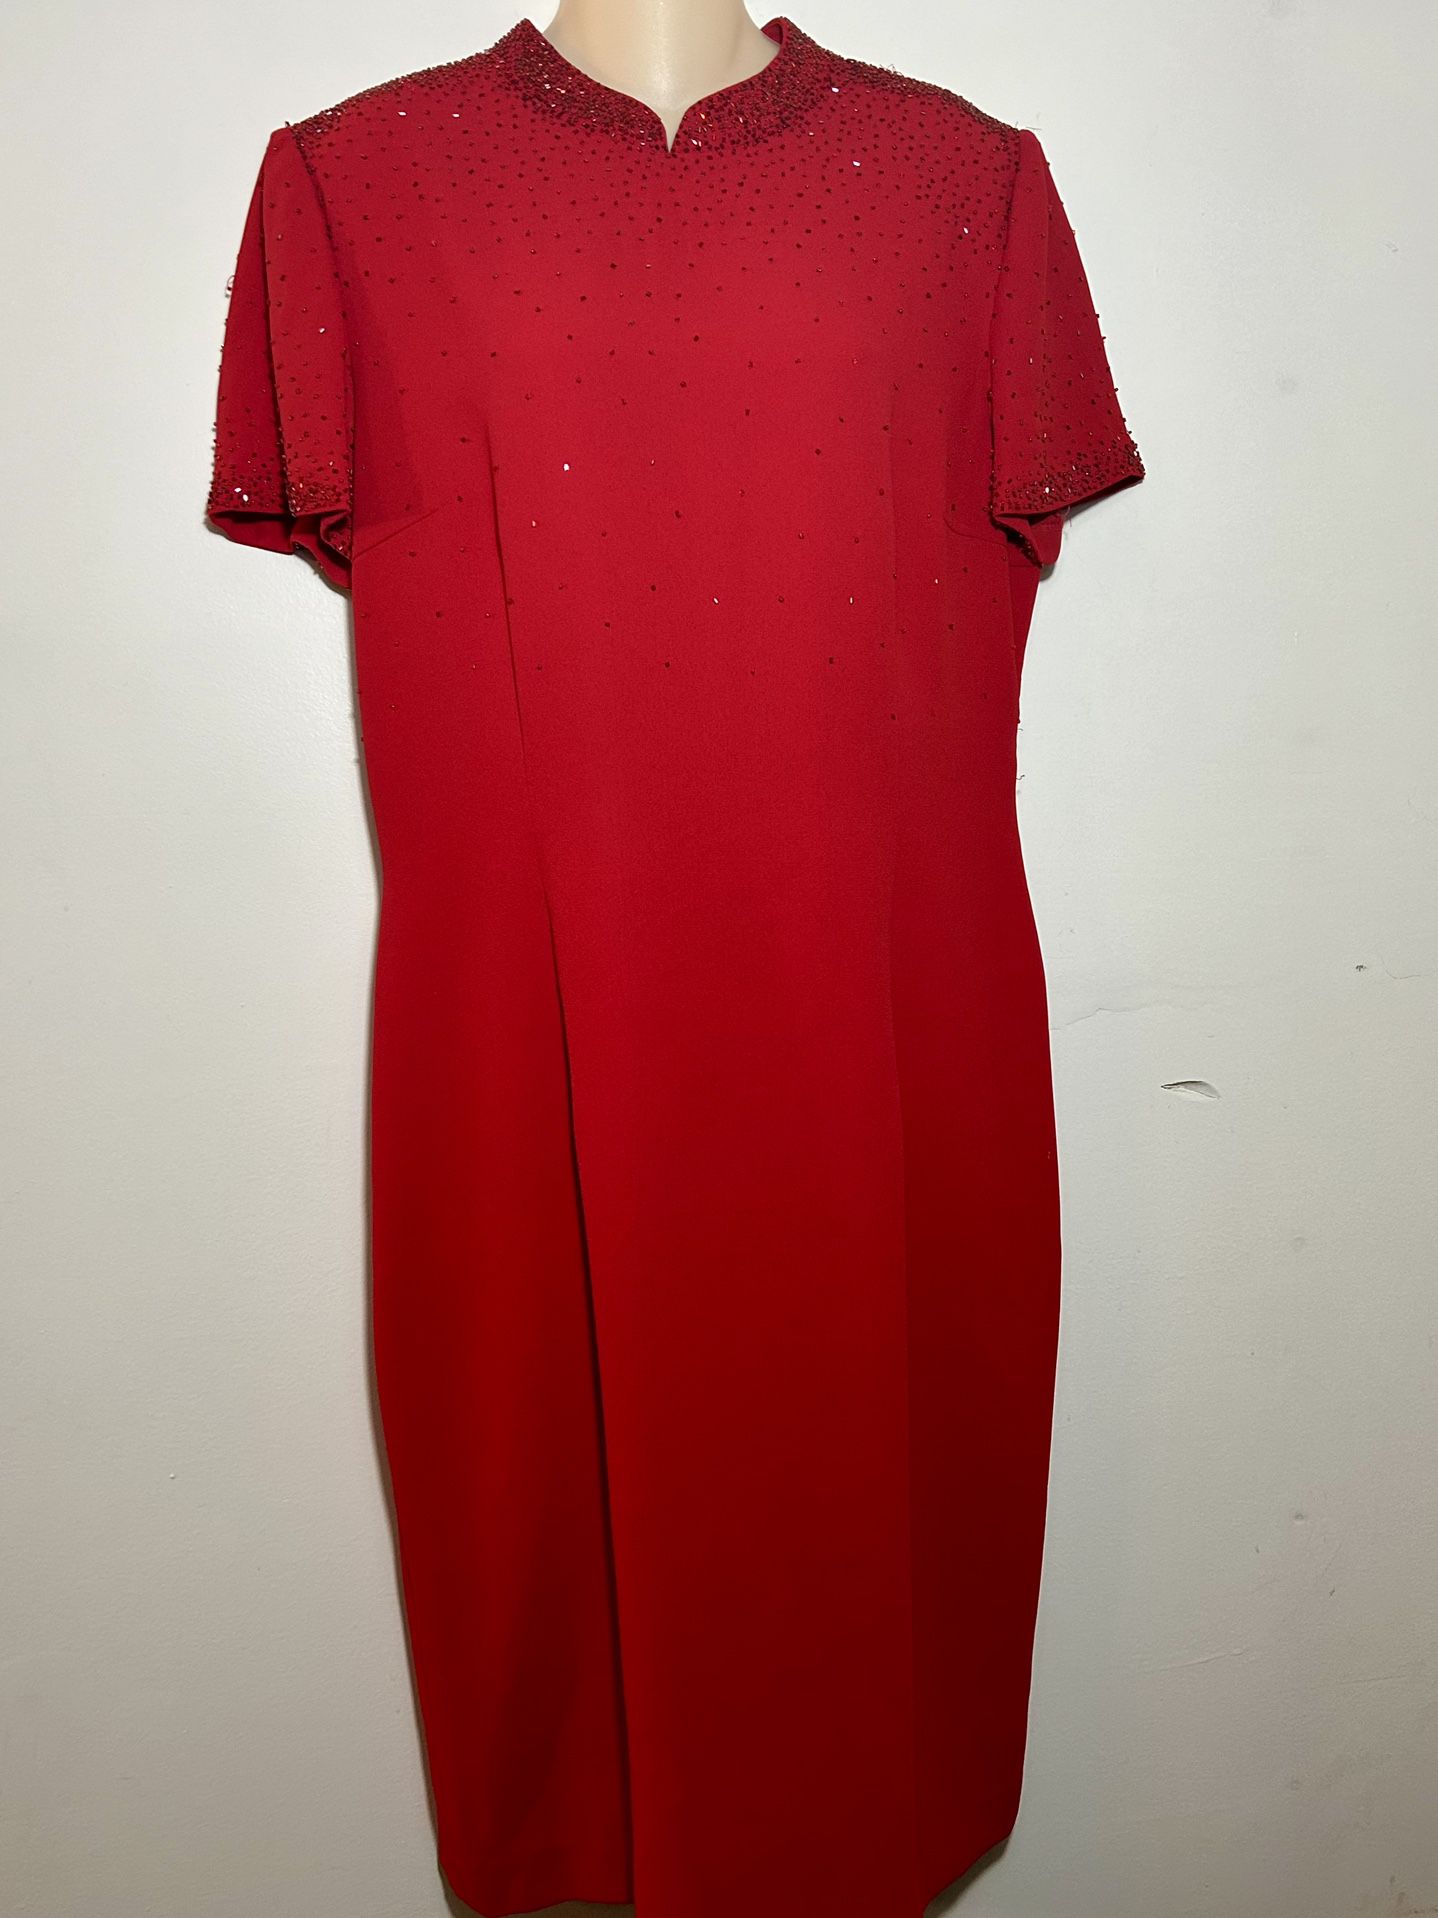 Women's red dress.Donna Morgan.Size 12. $50.